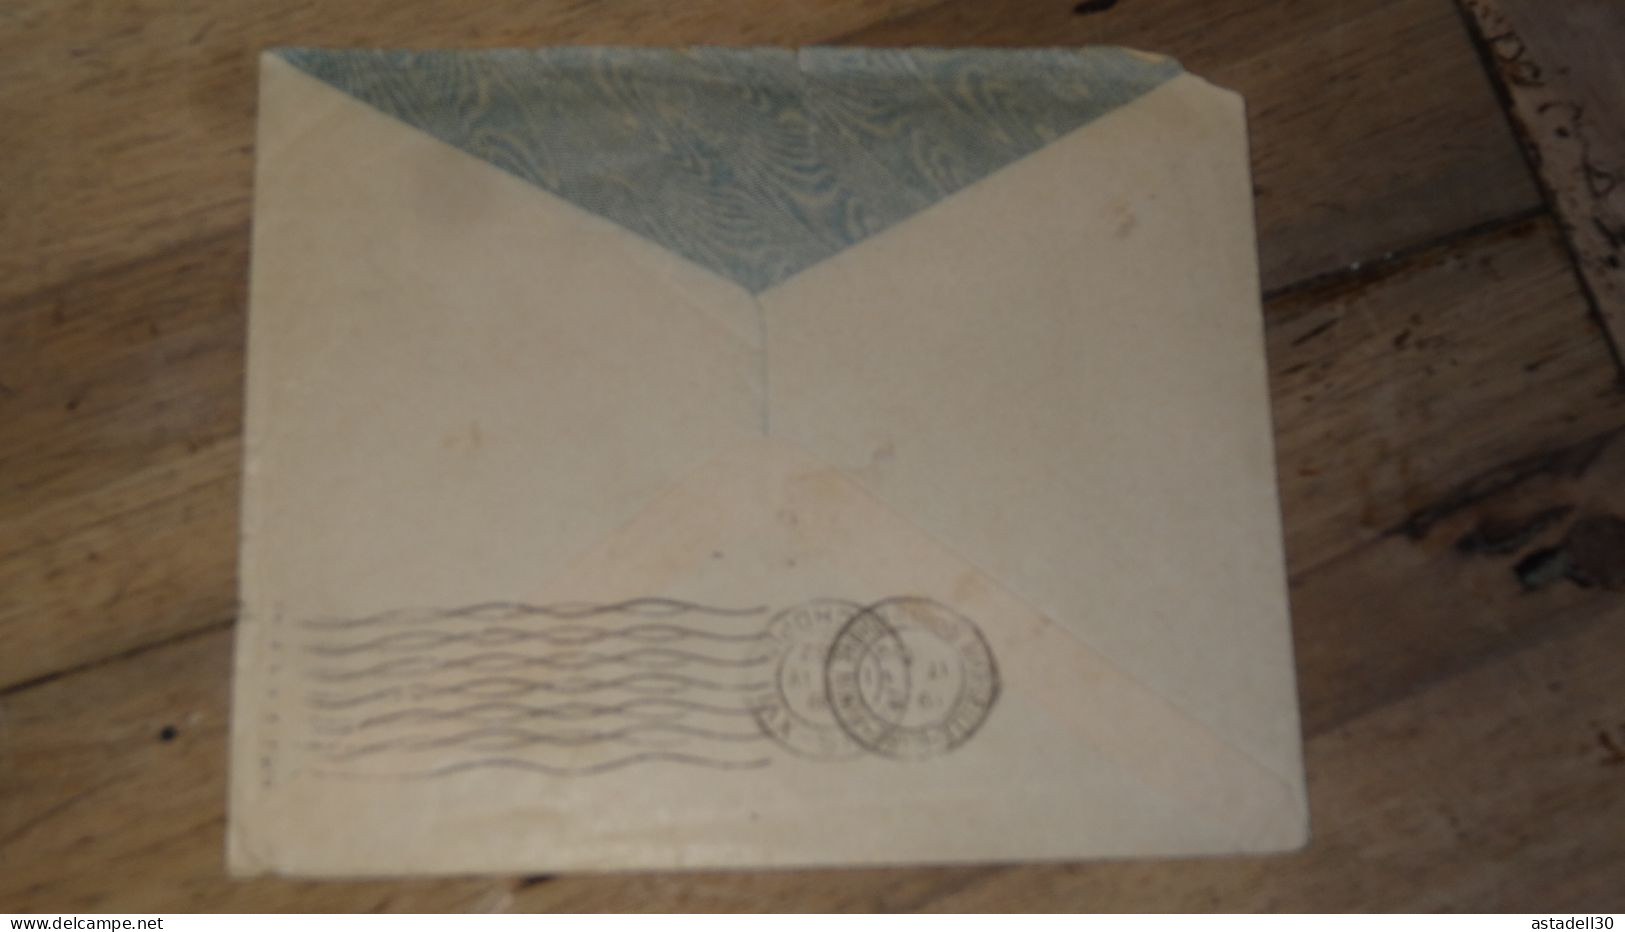 Enveloppe Indochine, Avion, 1932   ......... Boite1 ...... 240424-62 - Storia Postale